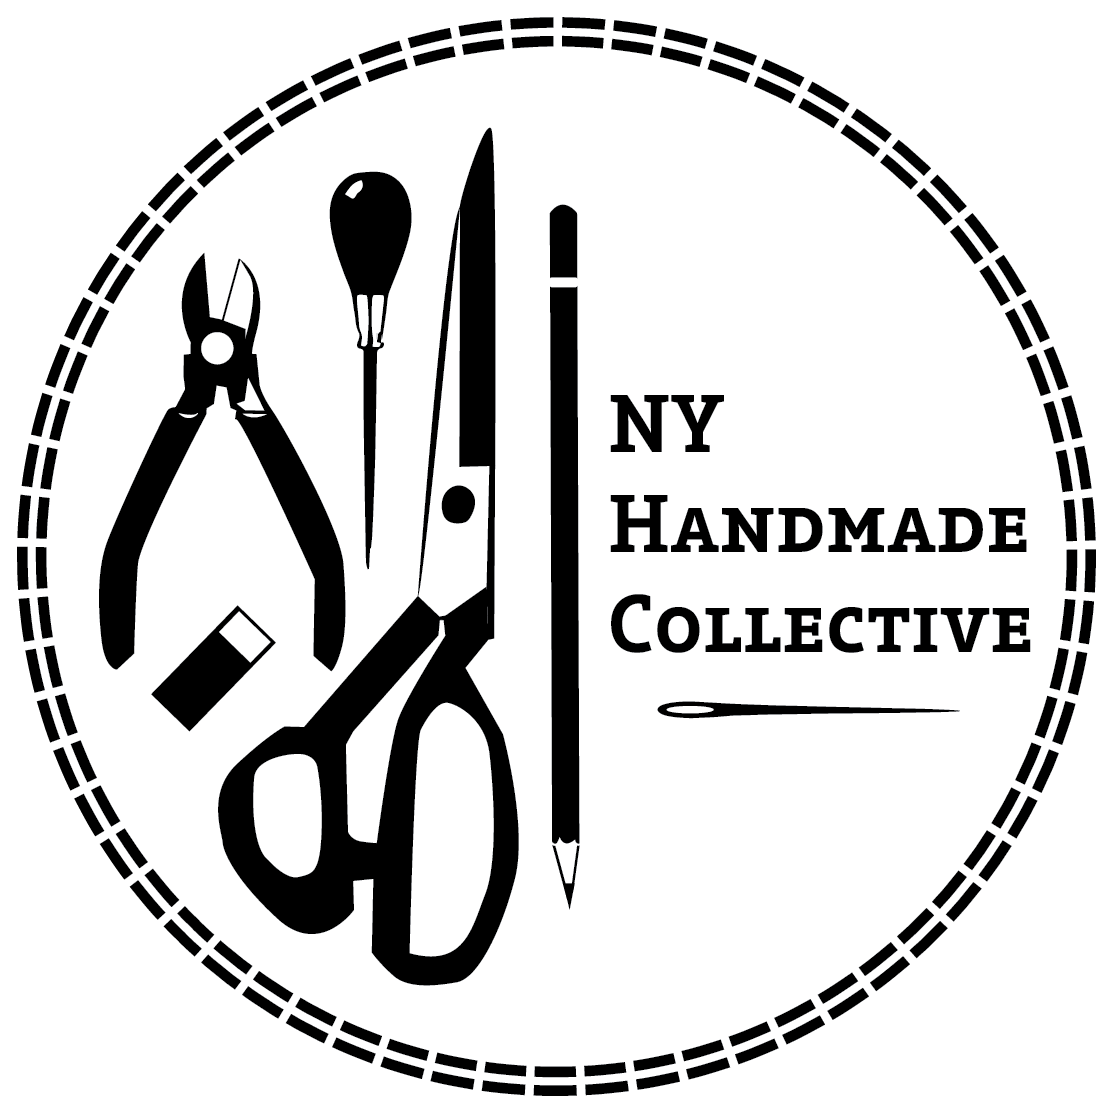 New York Handmade Collective